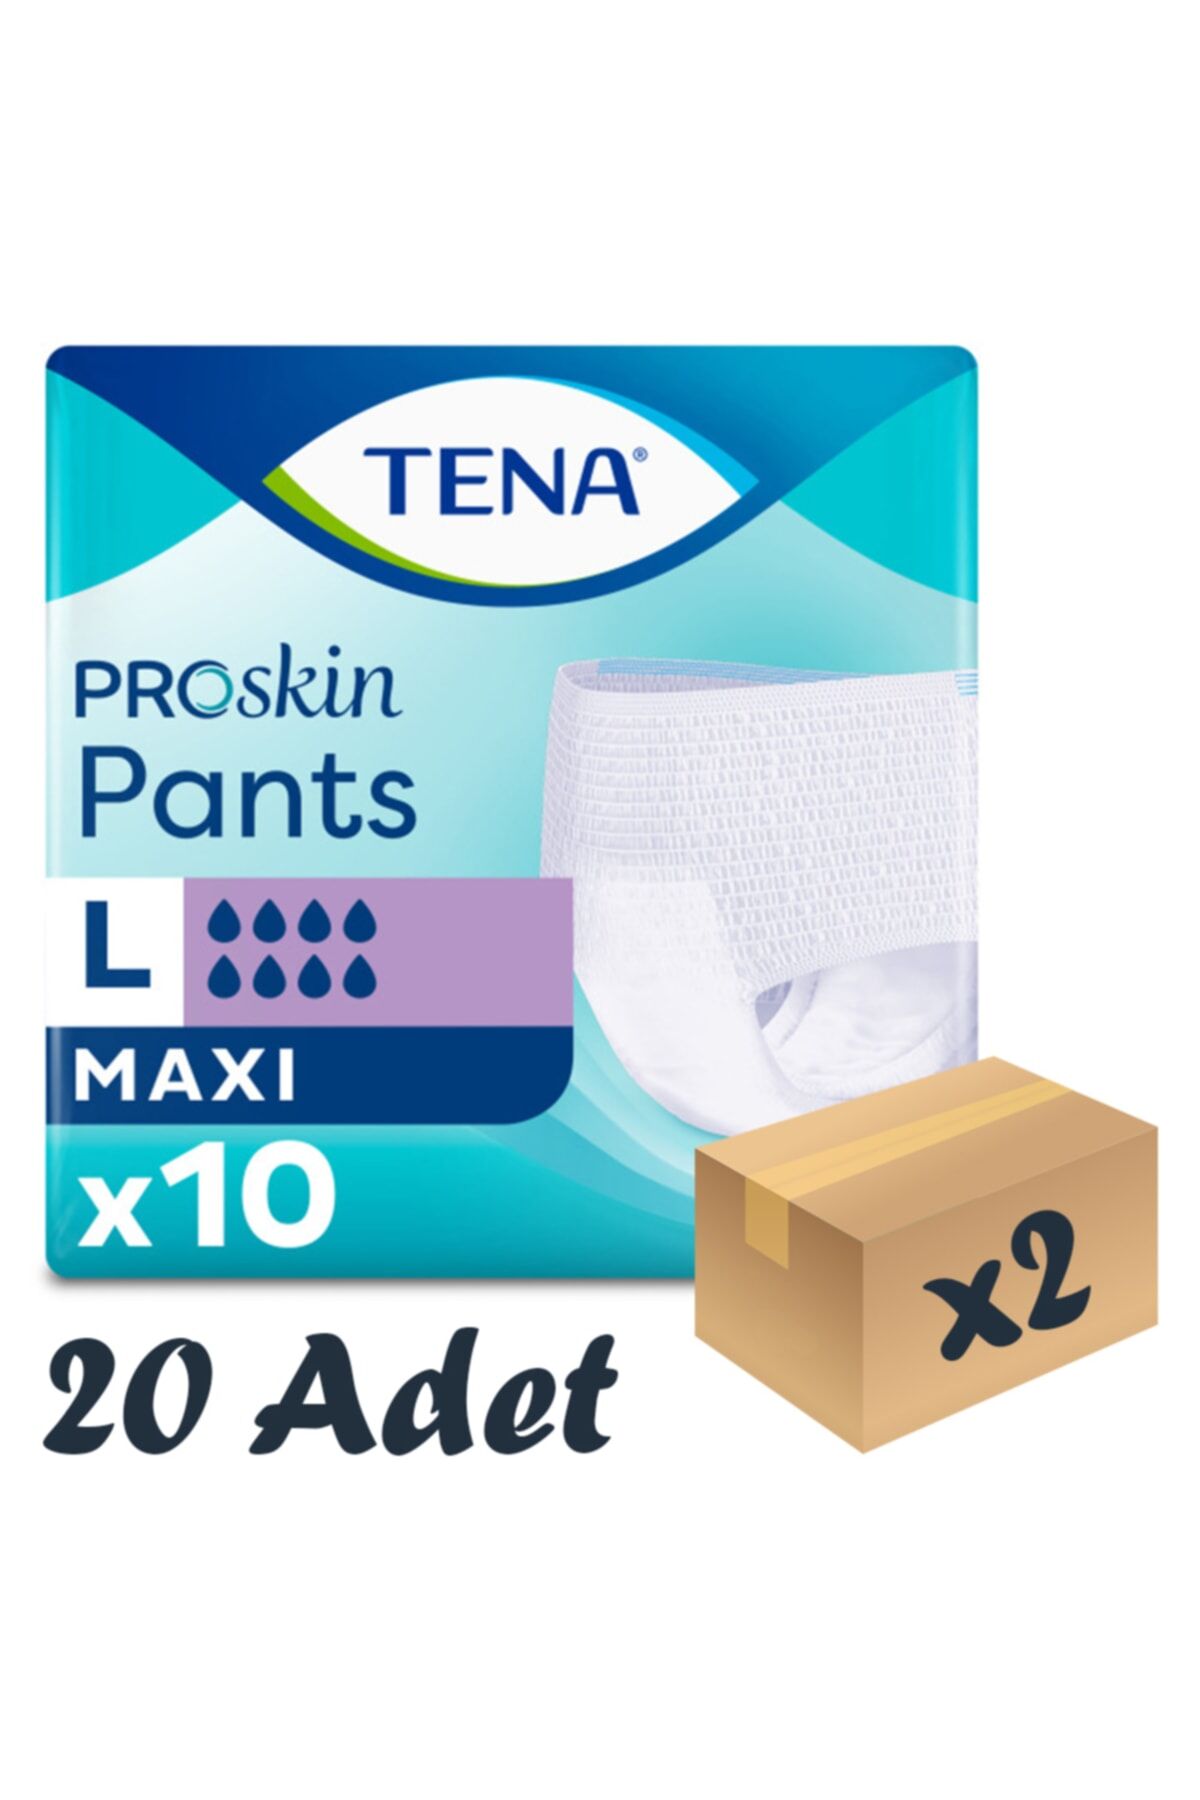 Tena Proskin Pants Maxi 8 damla Emici Külot Büyük Boy Large 10'lu 2 paket / 20 adet